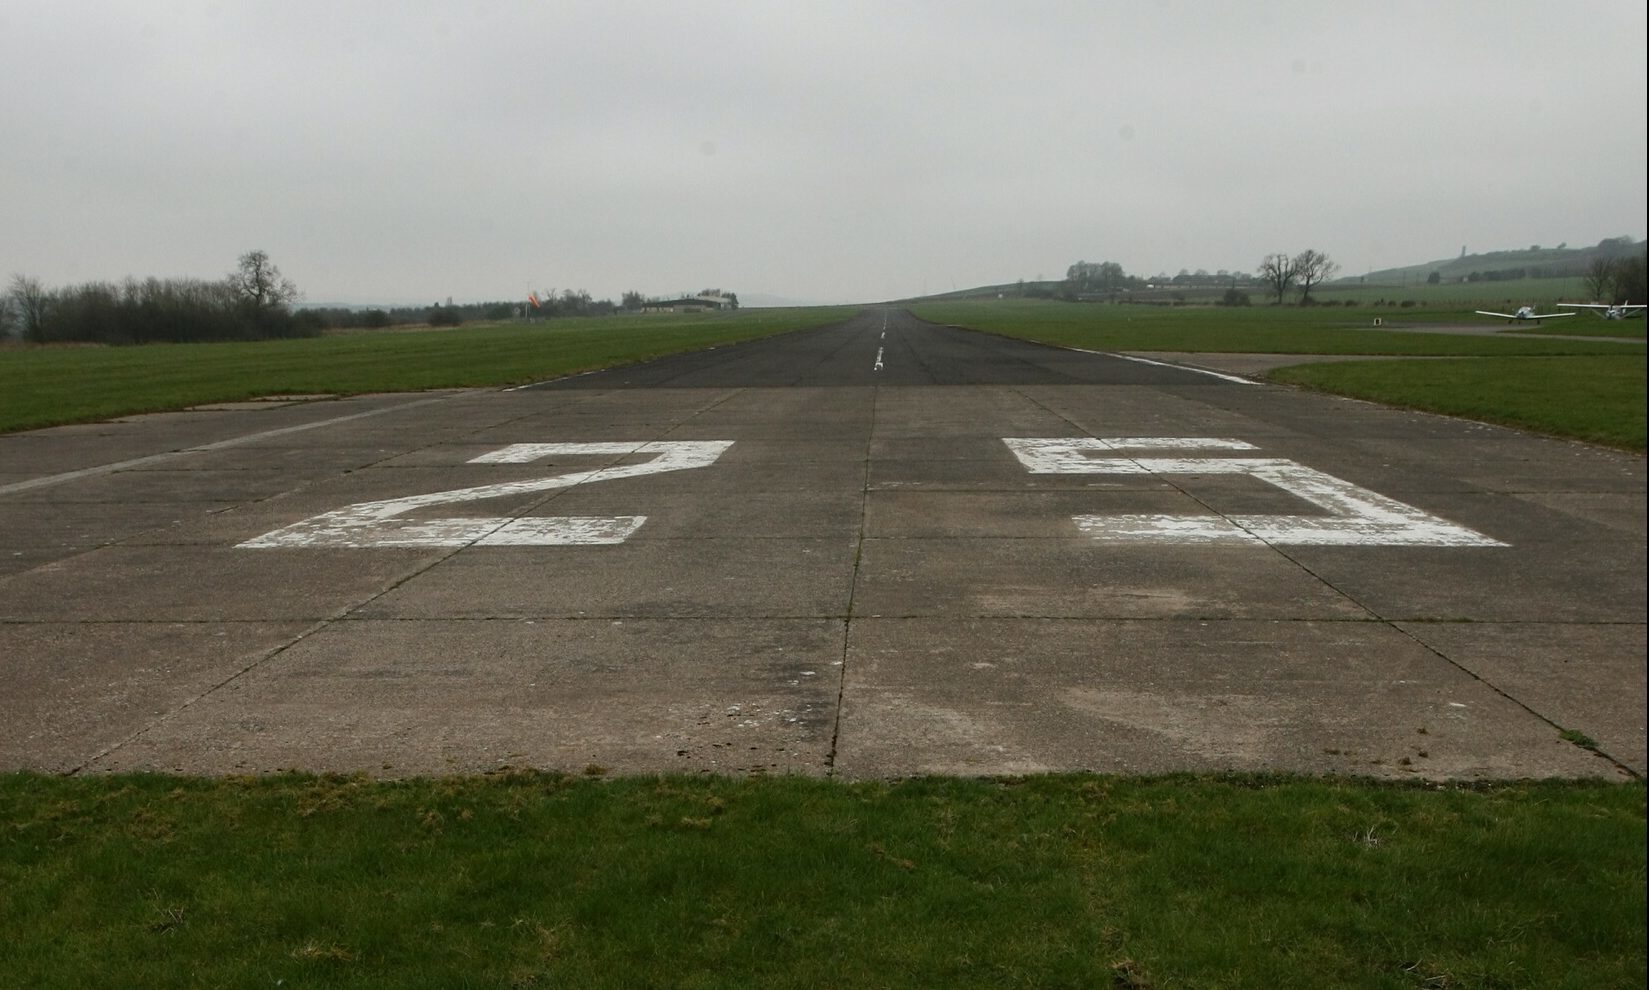 The runway at Fife Airport.